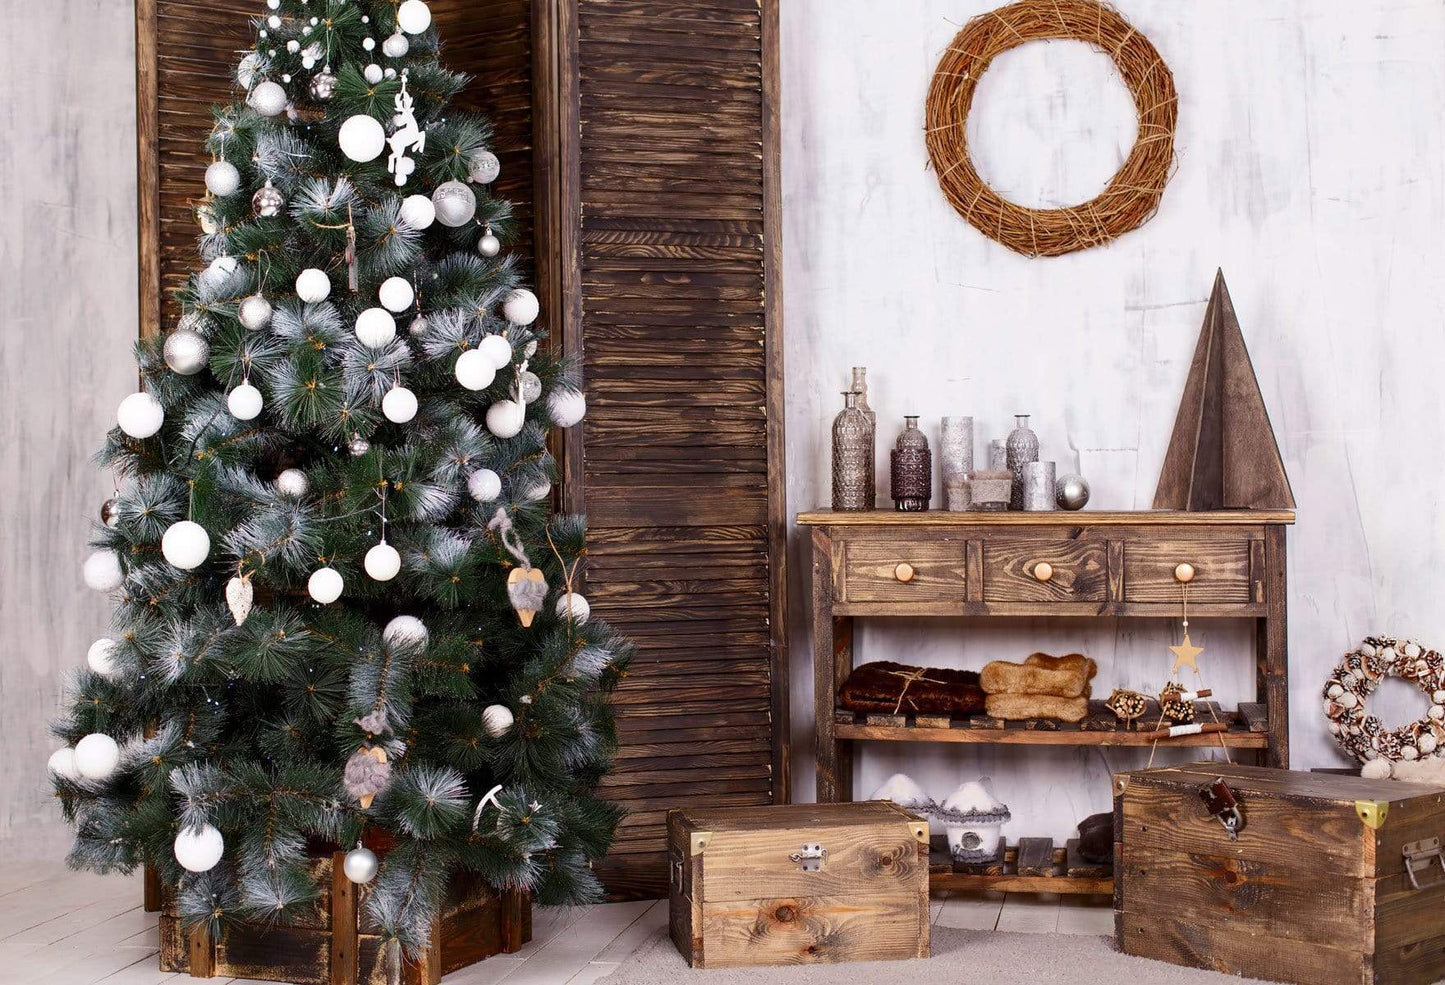 Kate クリスマスツリーと木製のテーブルの装飾